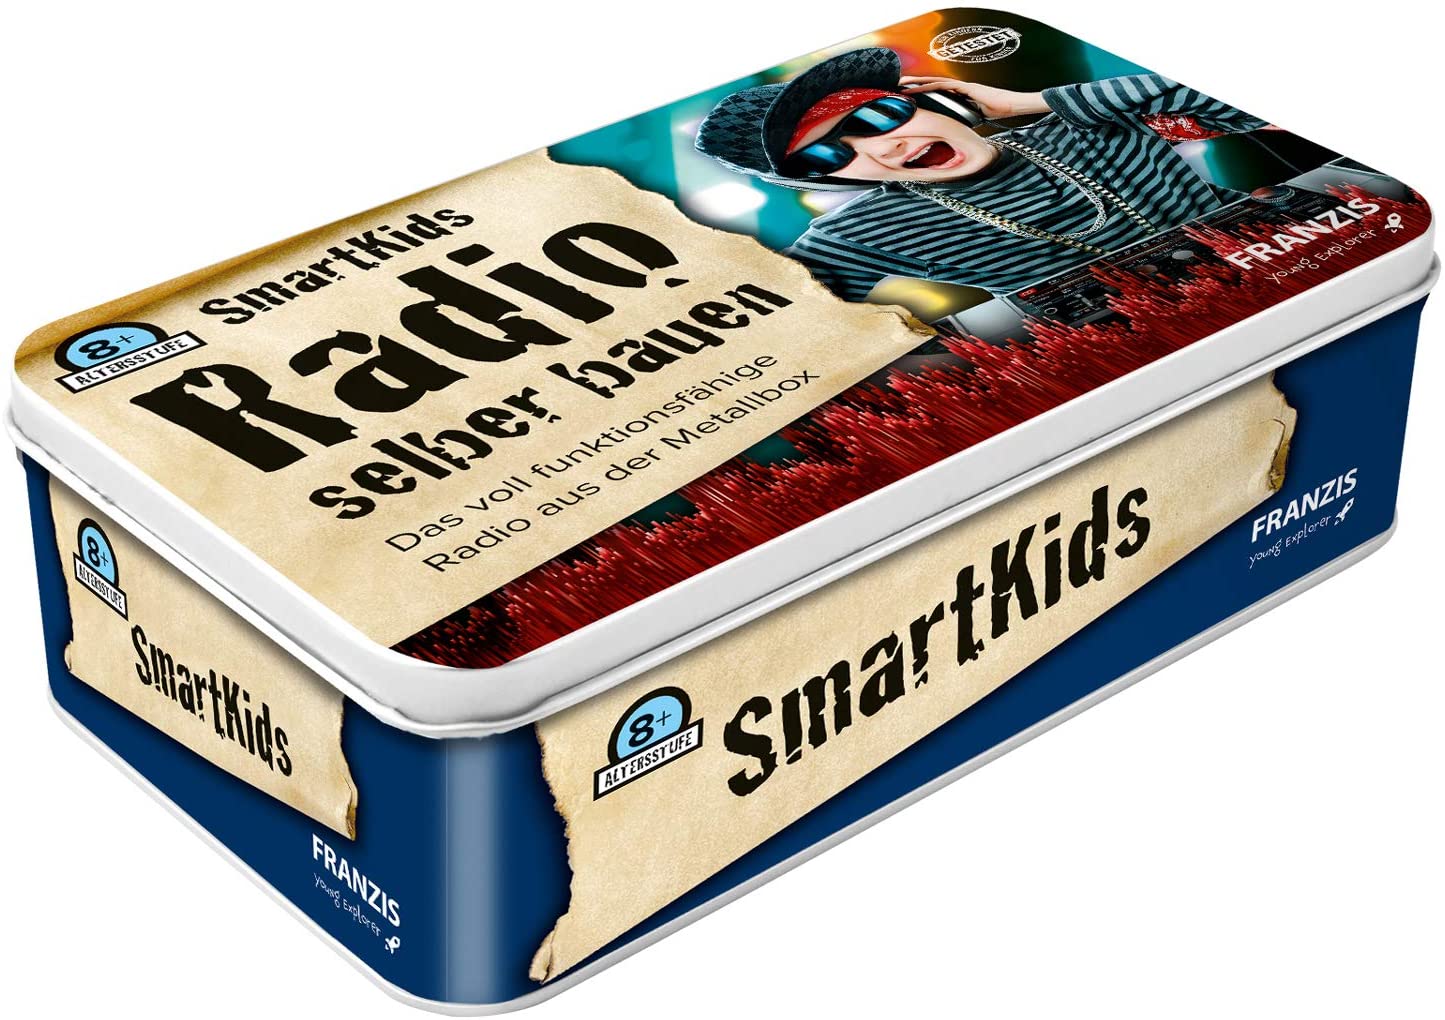 Smartkids Fm Radio (Smartkids Adventure Electronics)